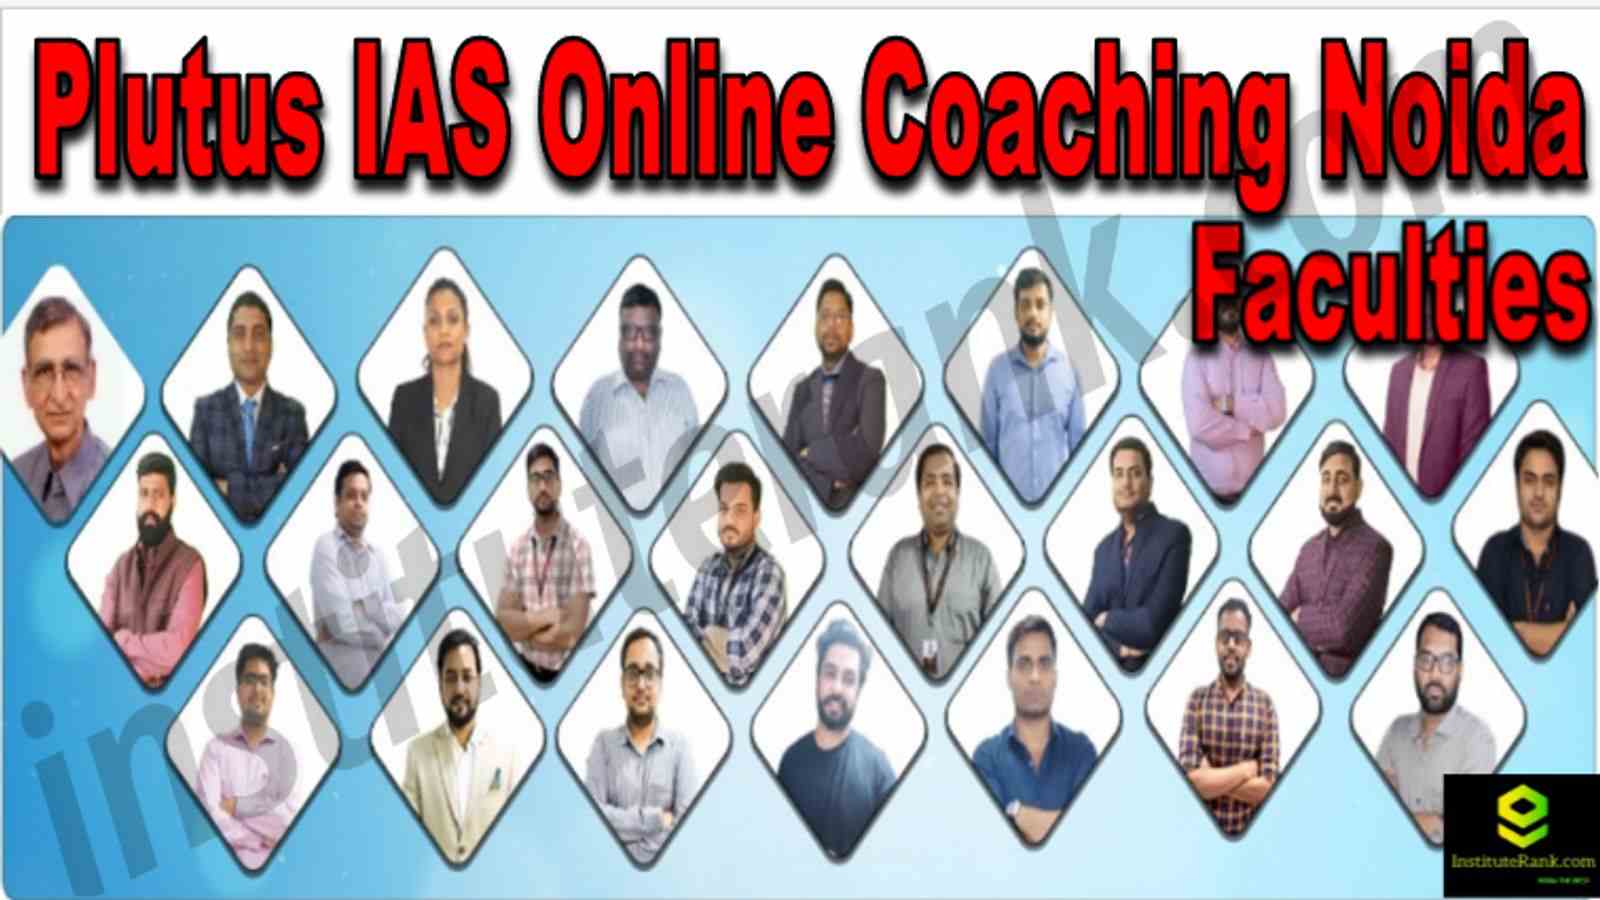 Plutus IAS Online Coaching Noida Reviews Faculties